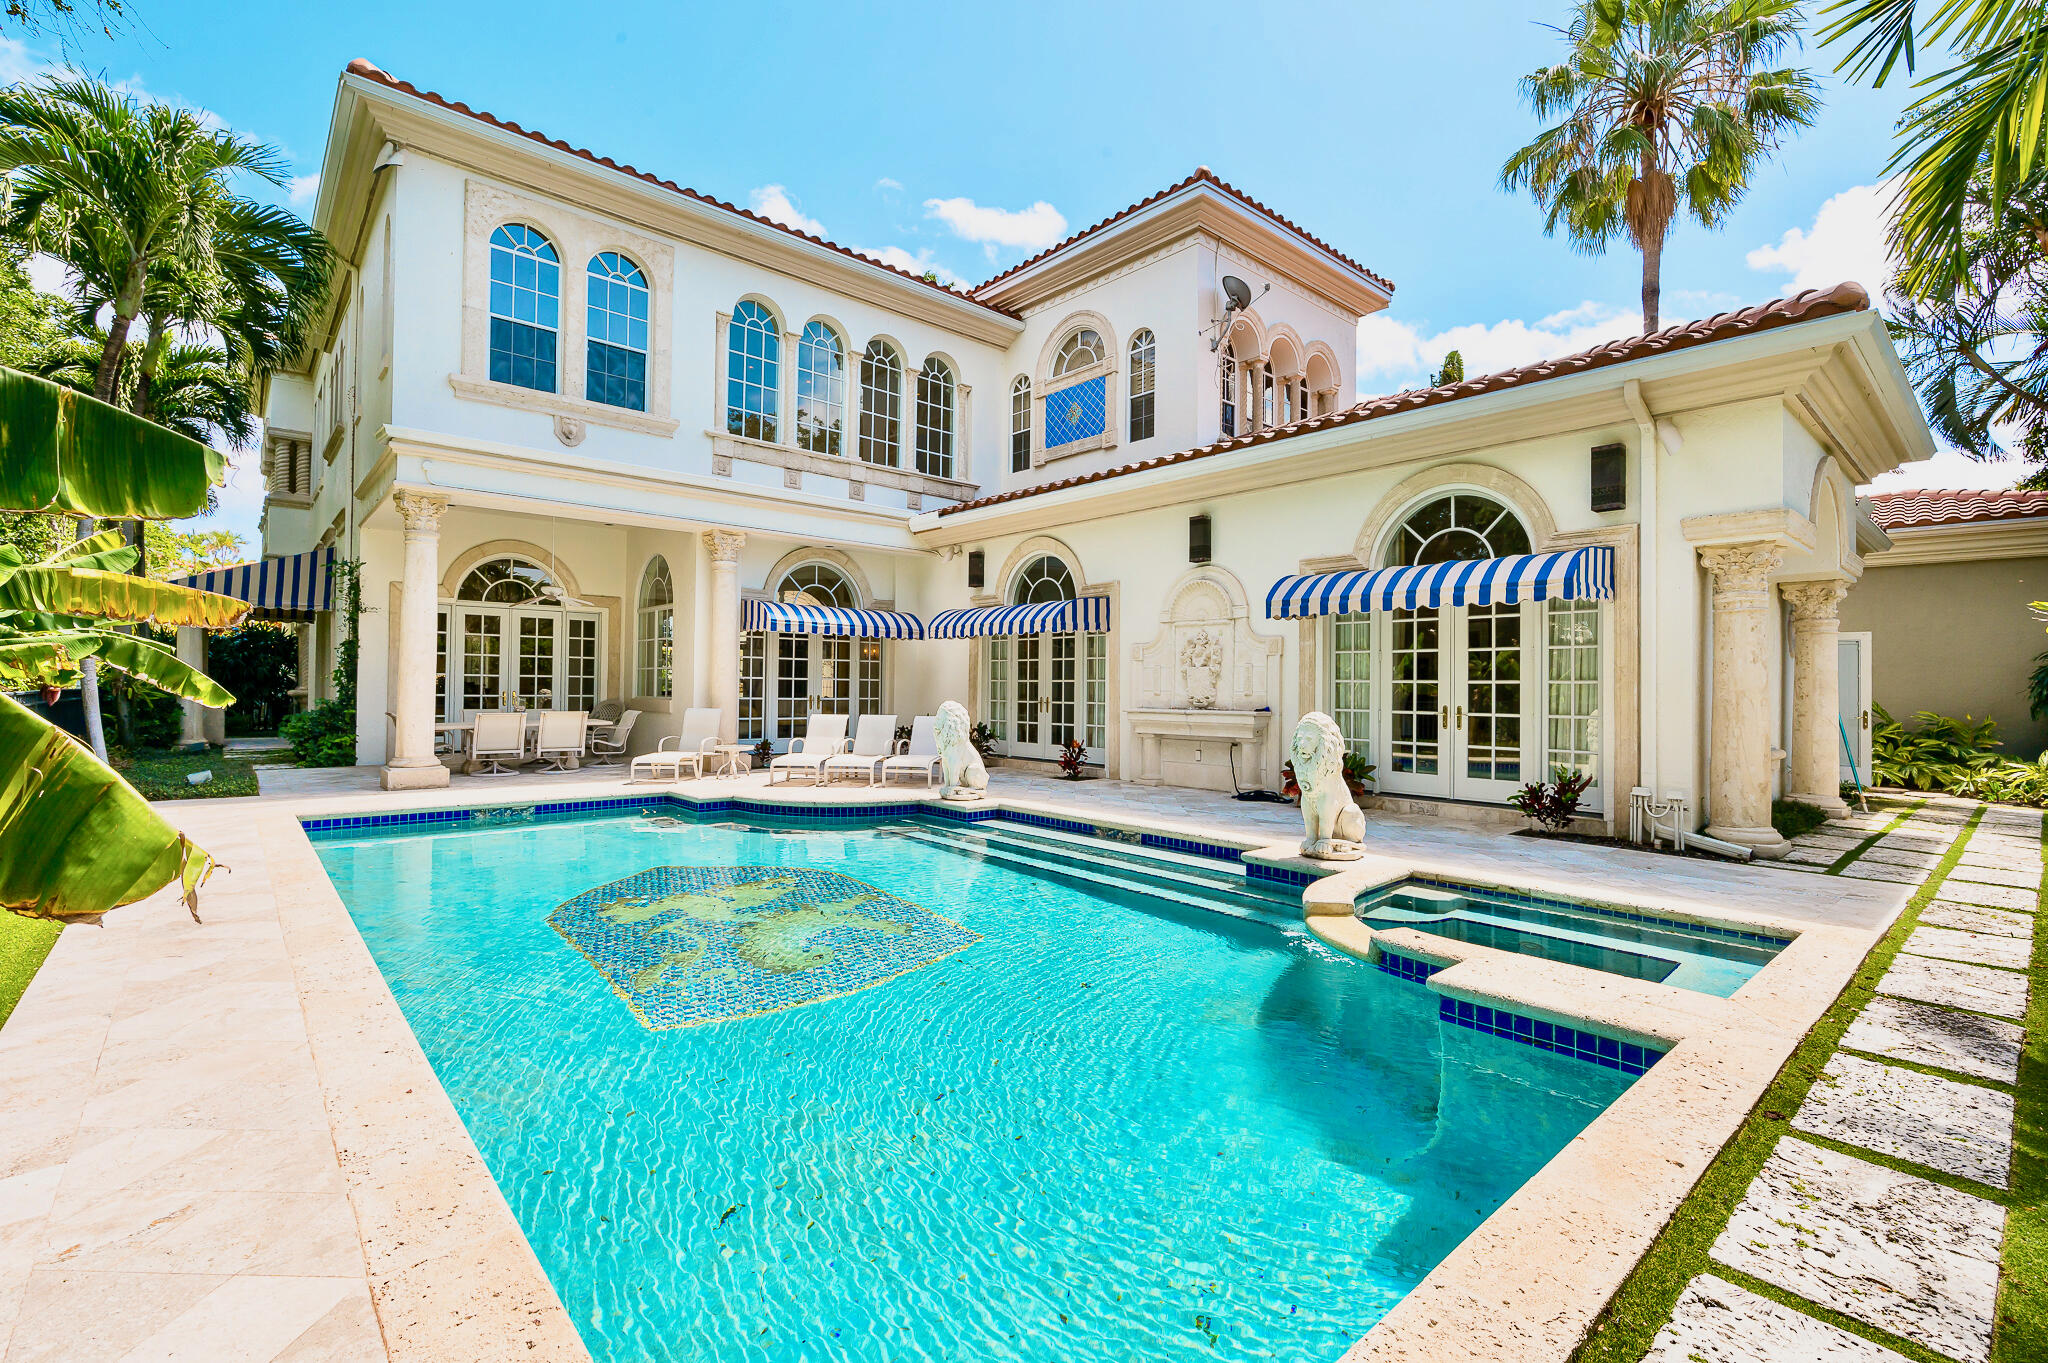 Property for Sale at 422 Addison Park Lane, Boca Raton, Palm Beach County, Florida - Bedrooms: 5 
Bathrooms: 6.5  - $5,999,900